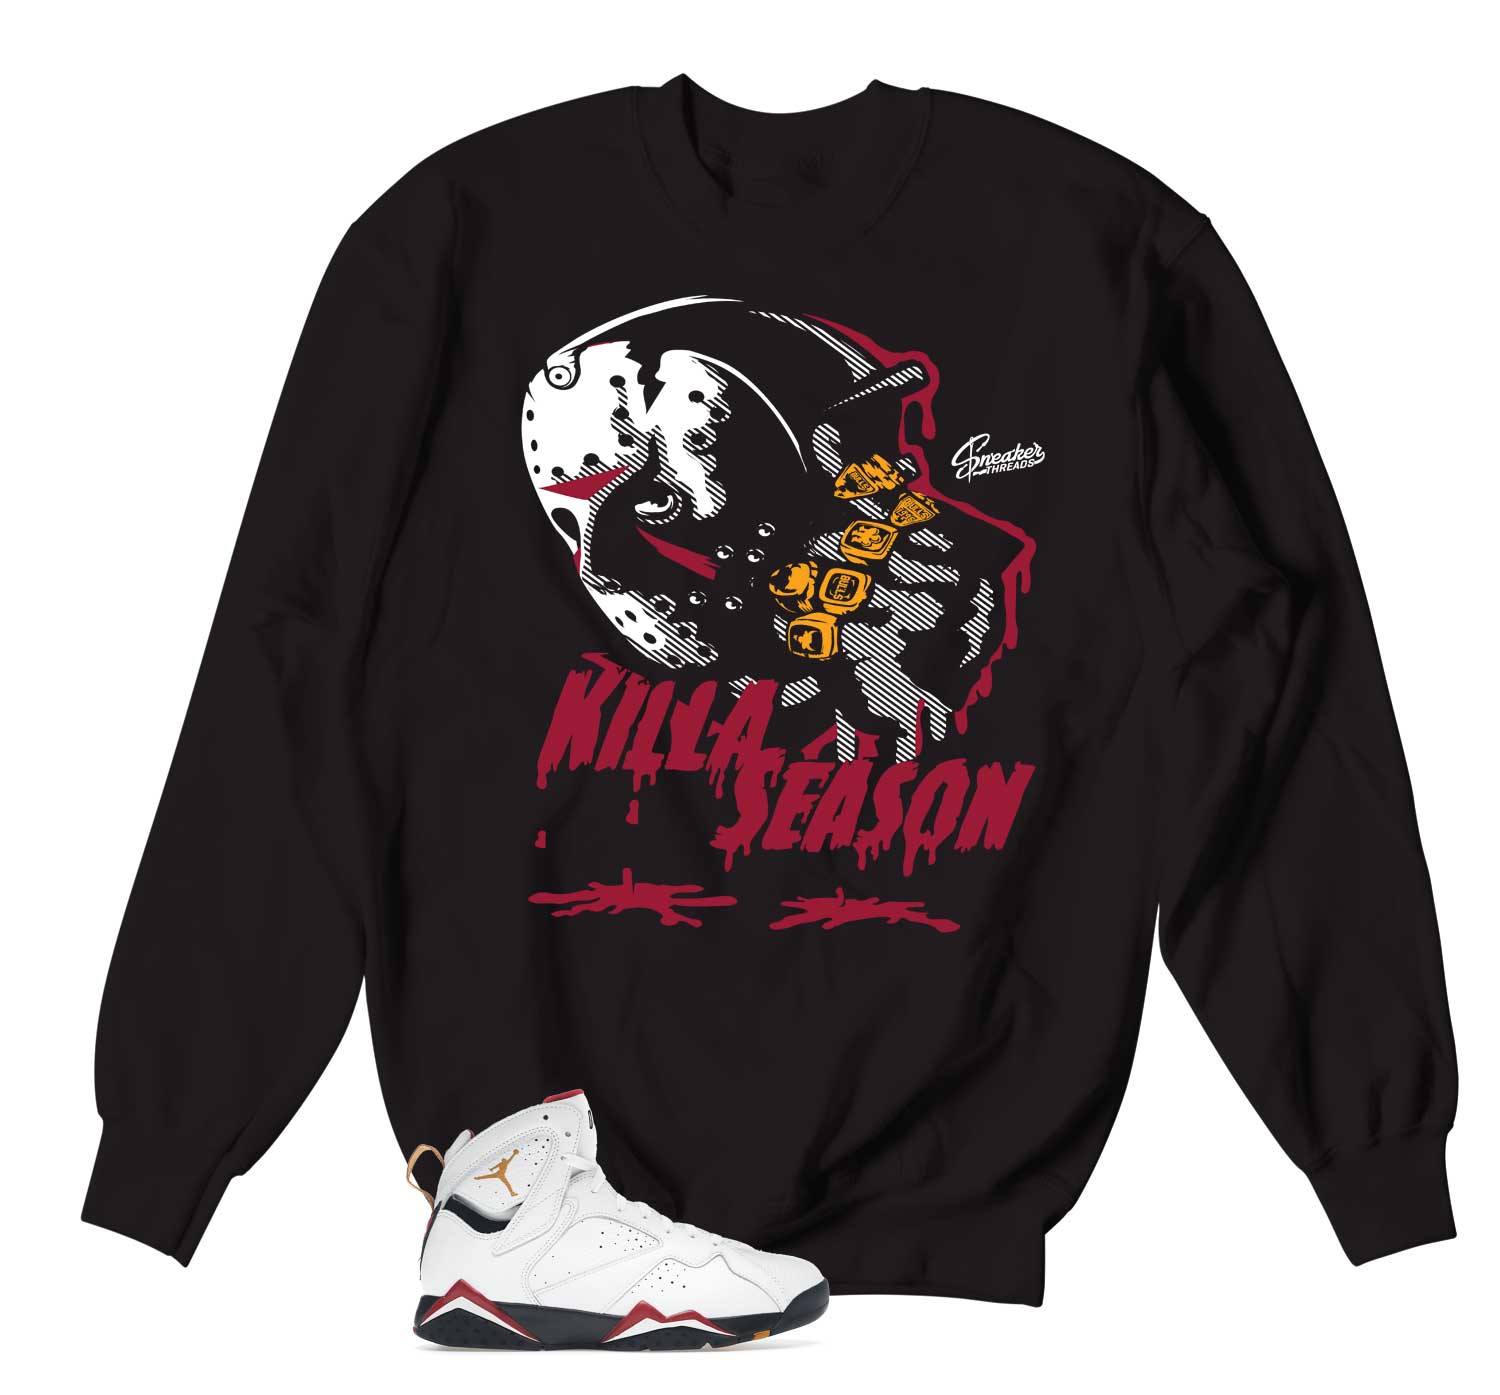 Retro 7 Cardinal Sweater - Killa season - Black